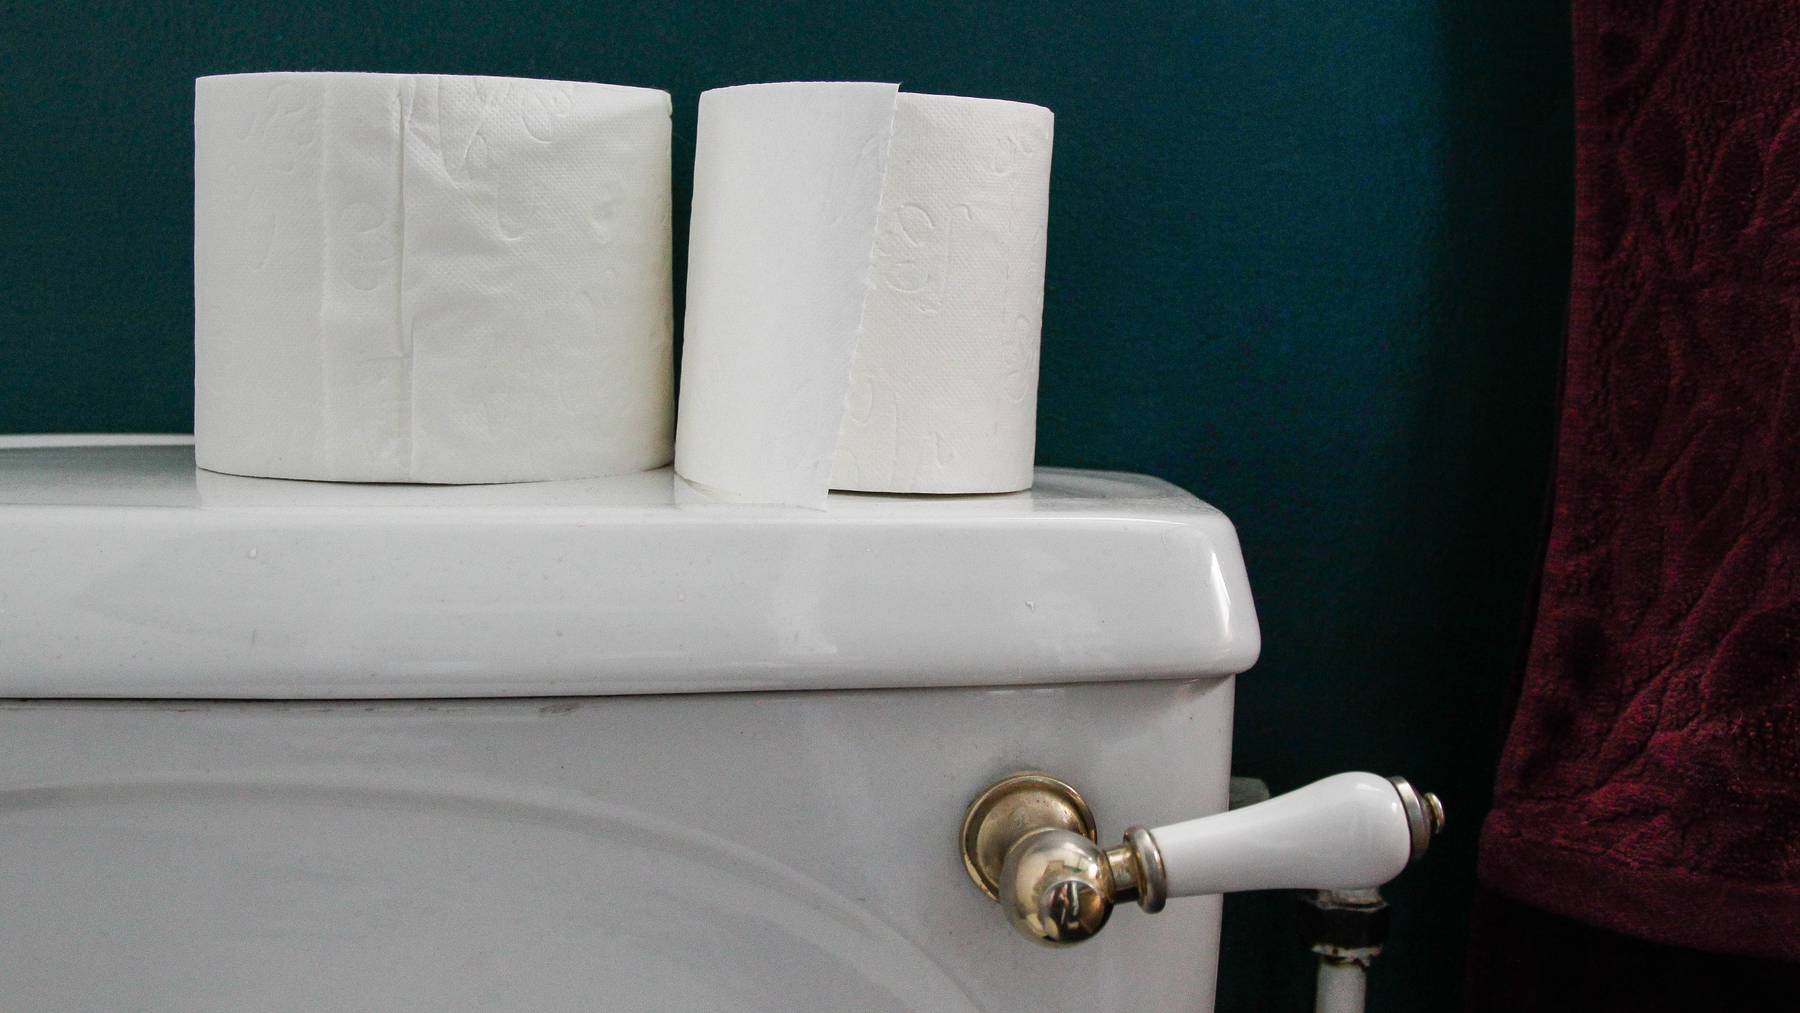 Sollen Toiletten in den Restaurants gratis sein?